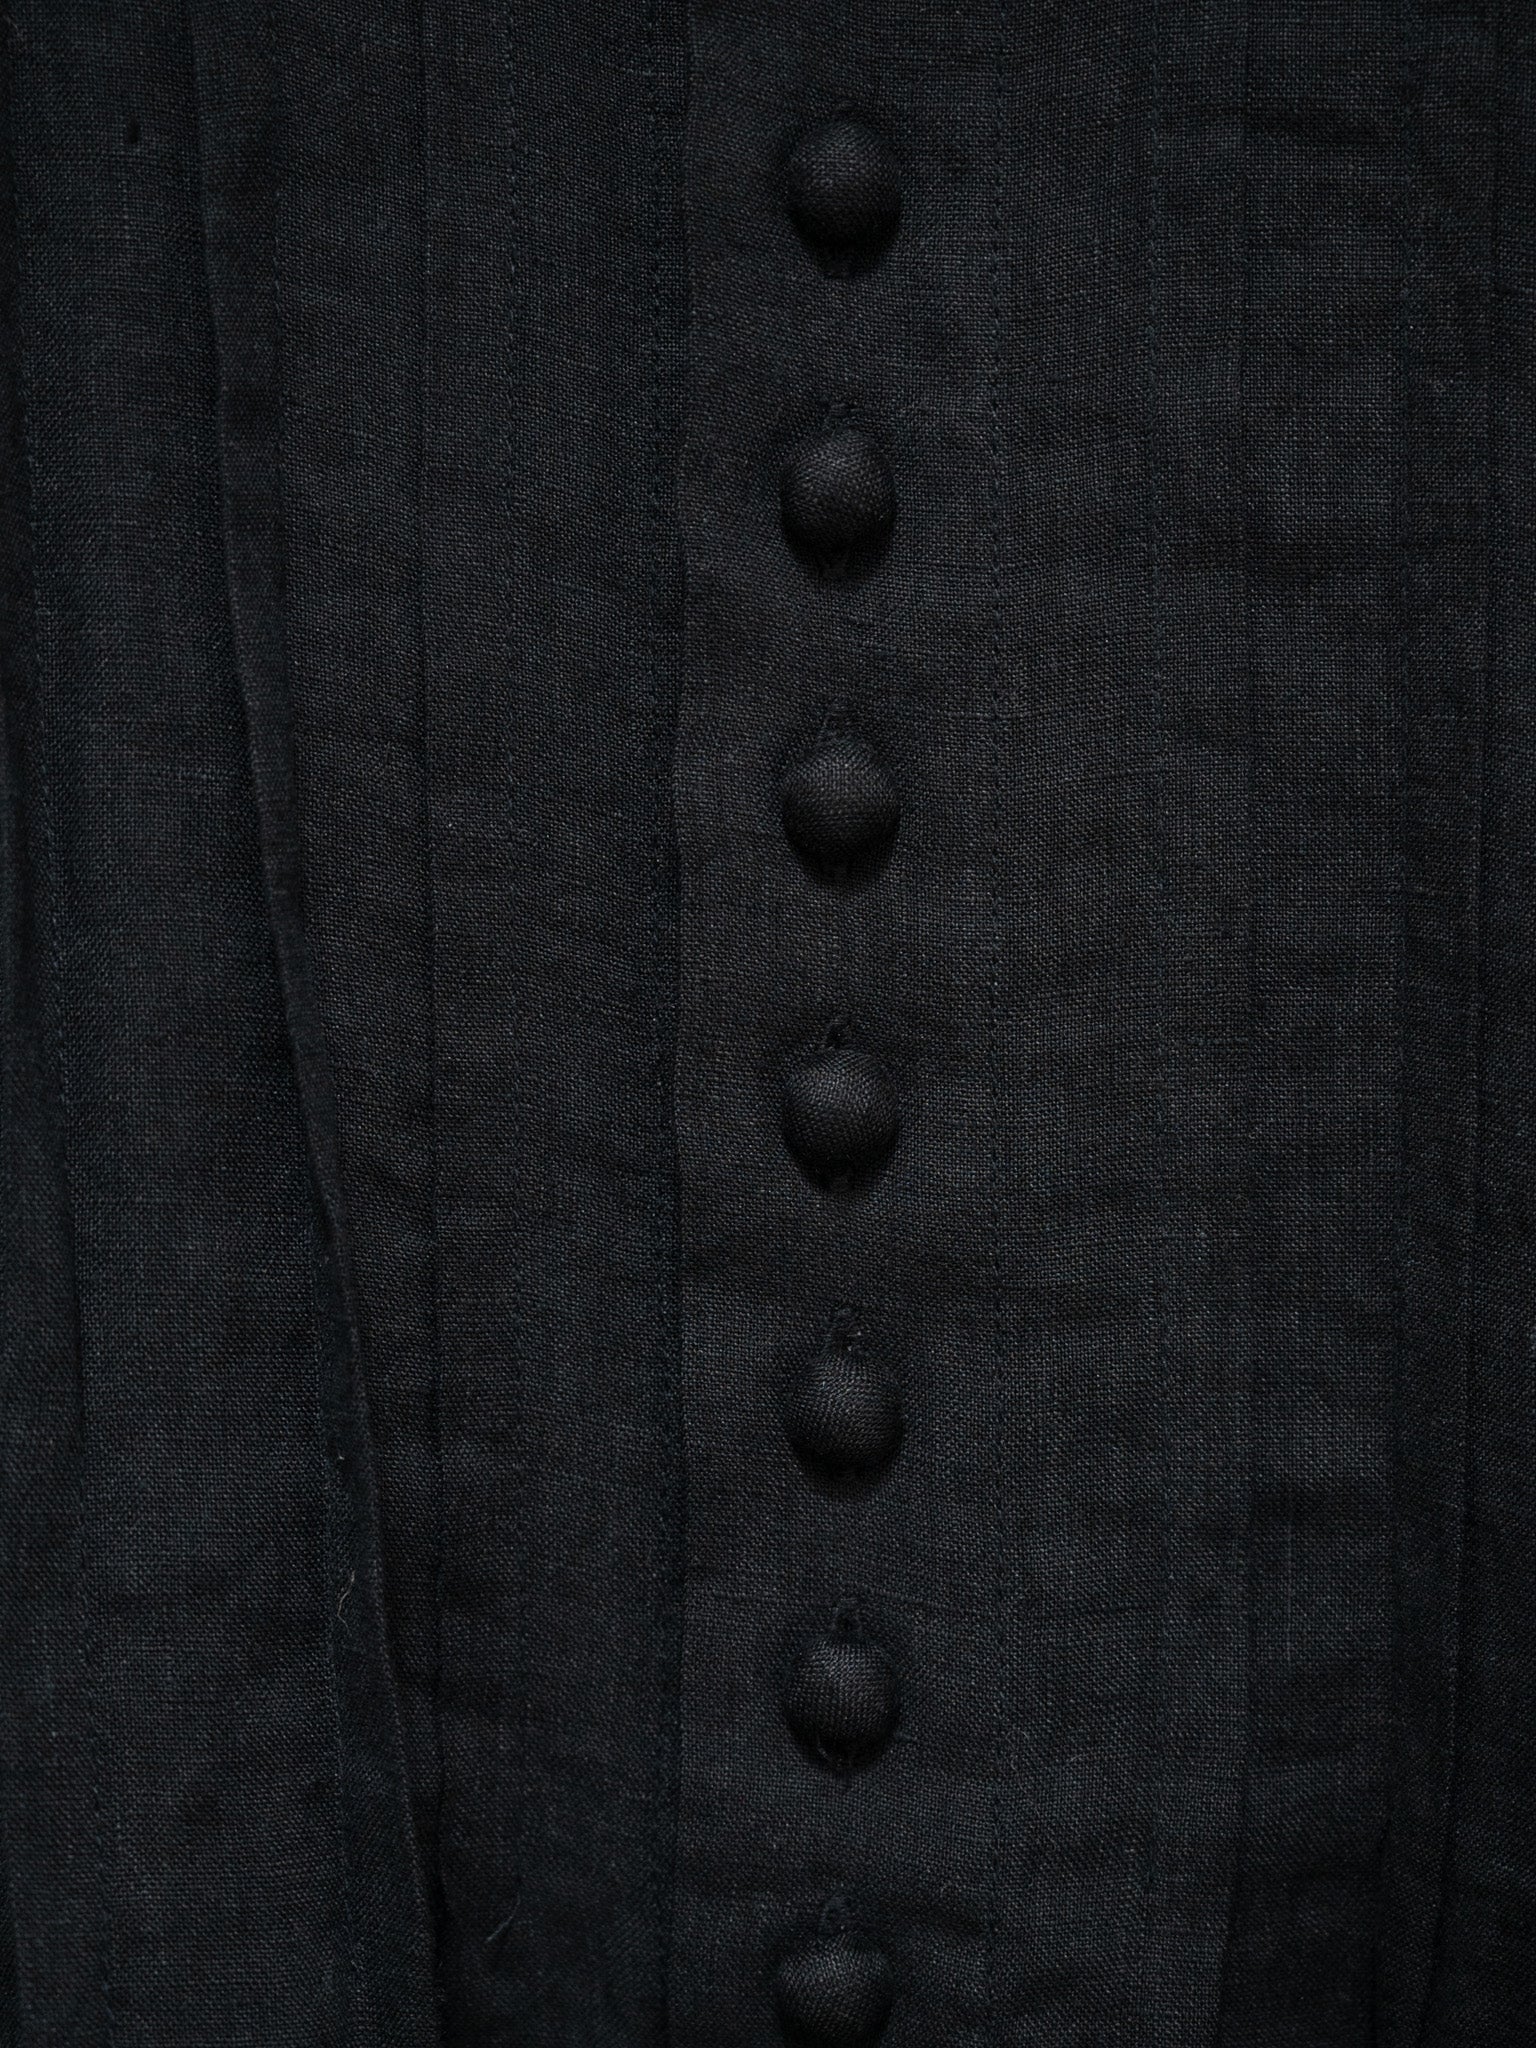 Namu Shop - Ichi Antiquites French Linen Shirt - Black